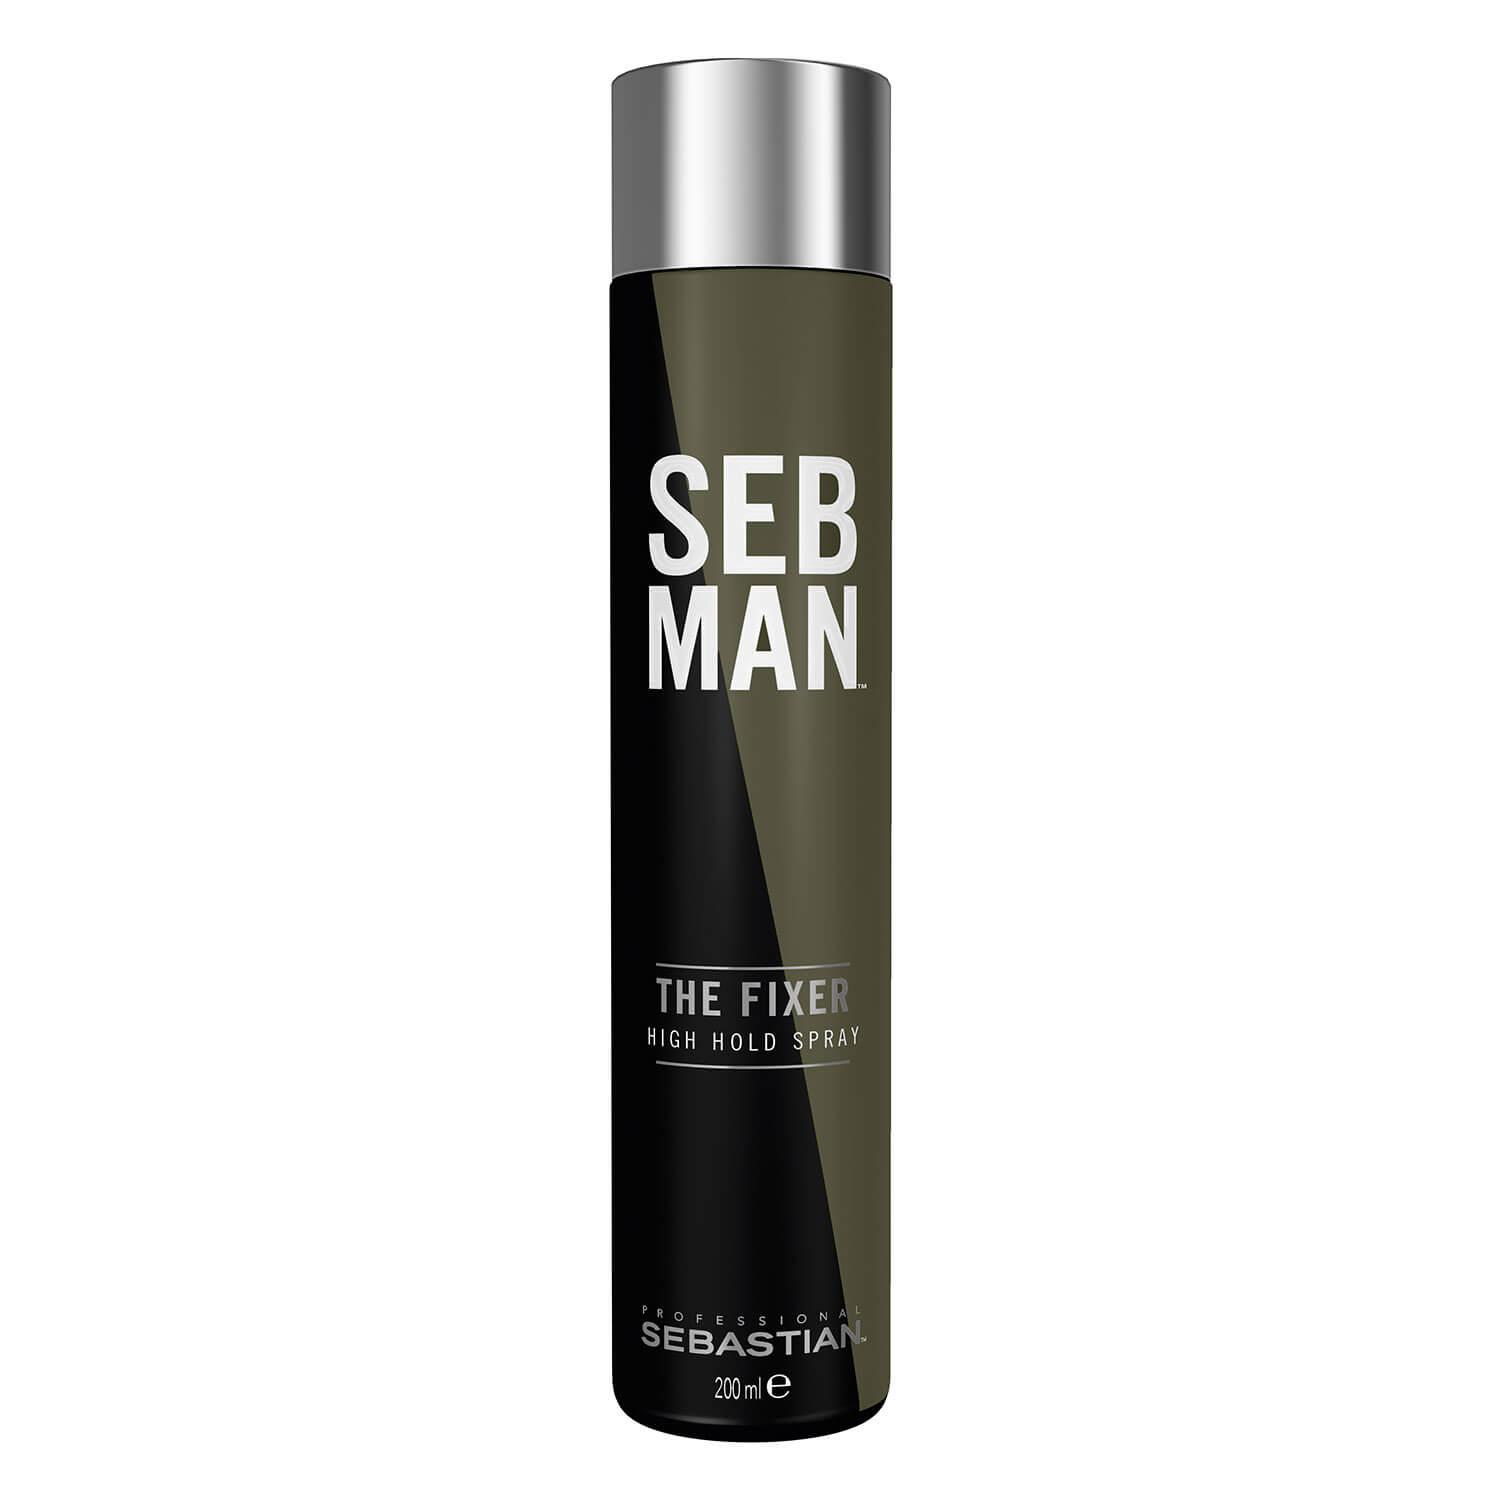 SEB MAN - The Fixer High Hold Spray